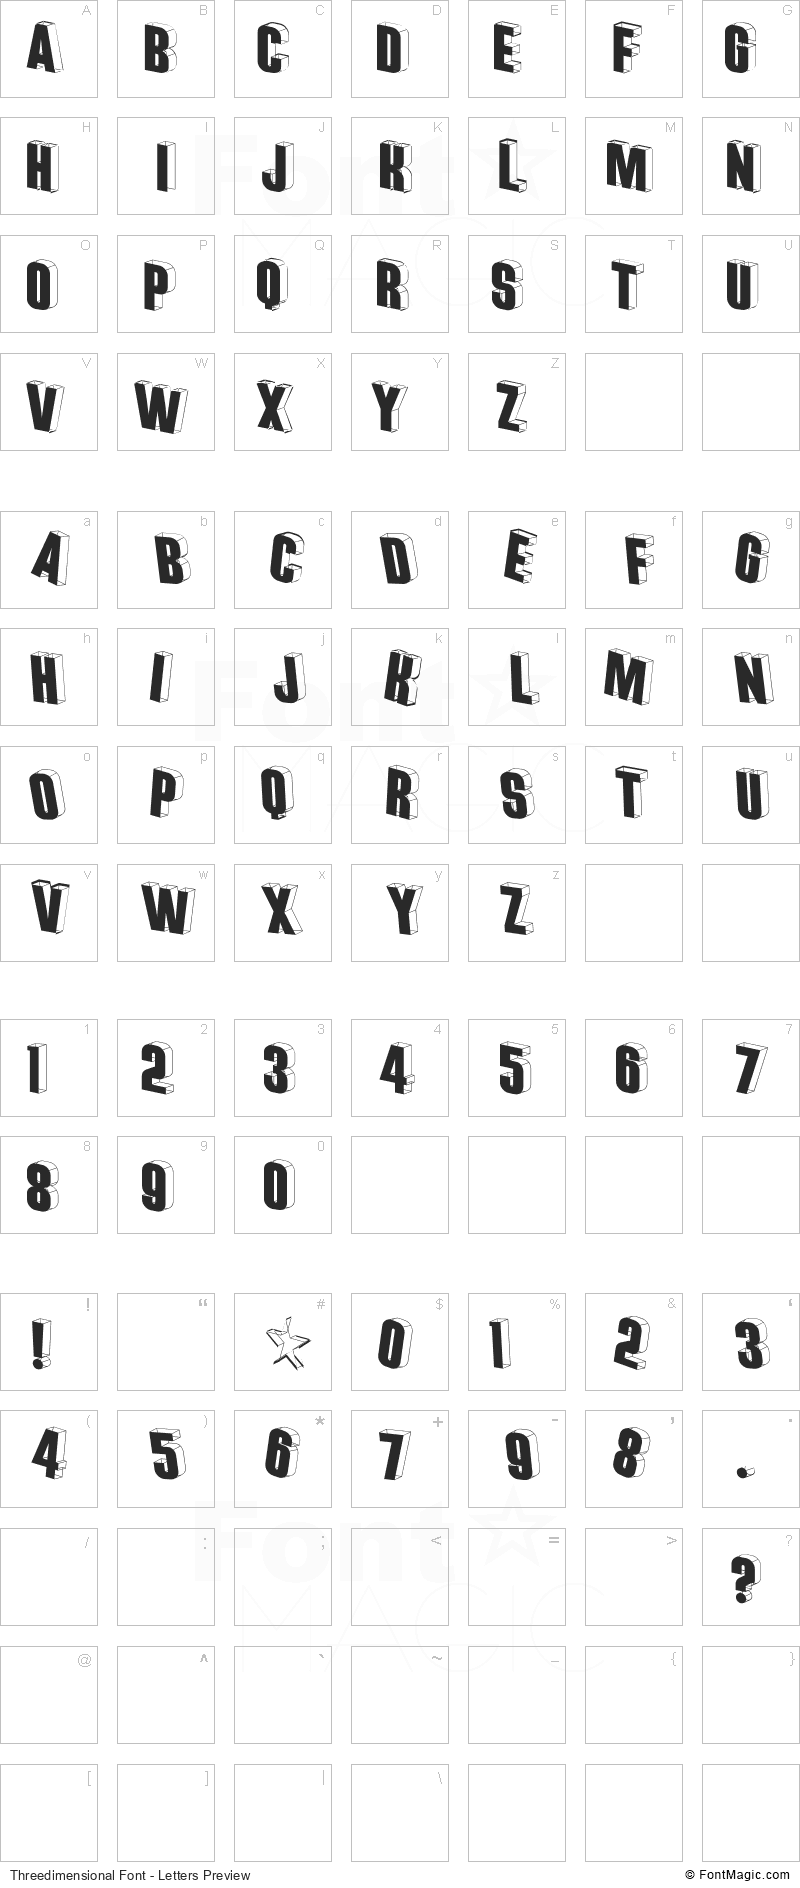 Threedimensional Font - All Latters Preview Chart